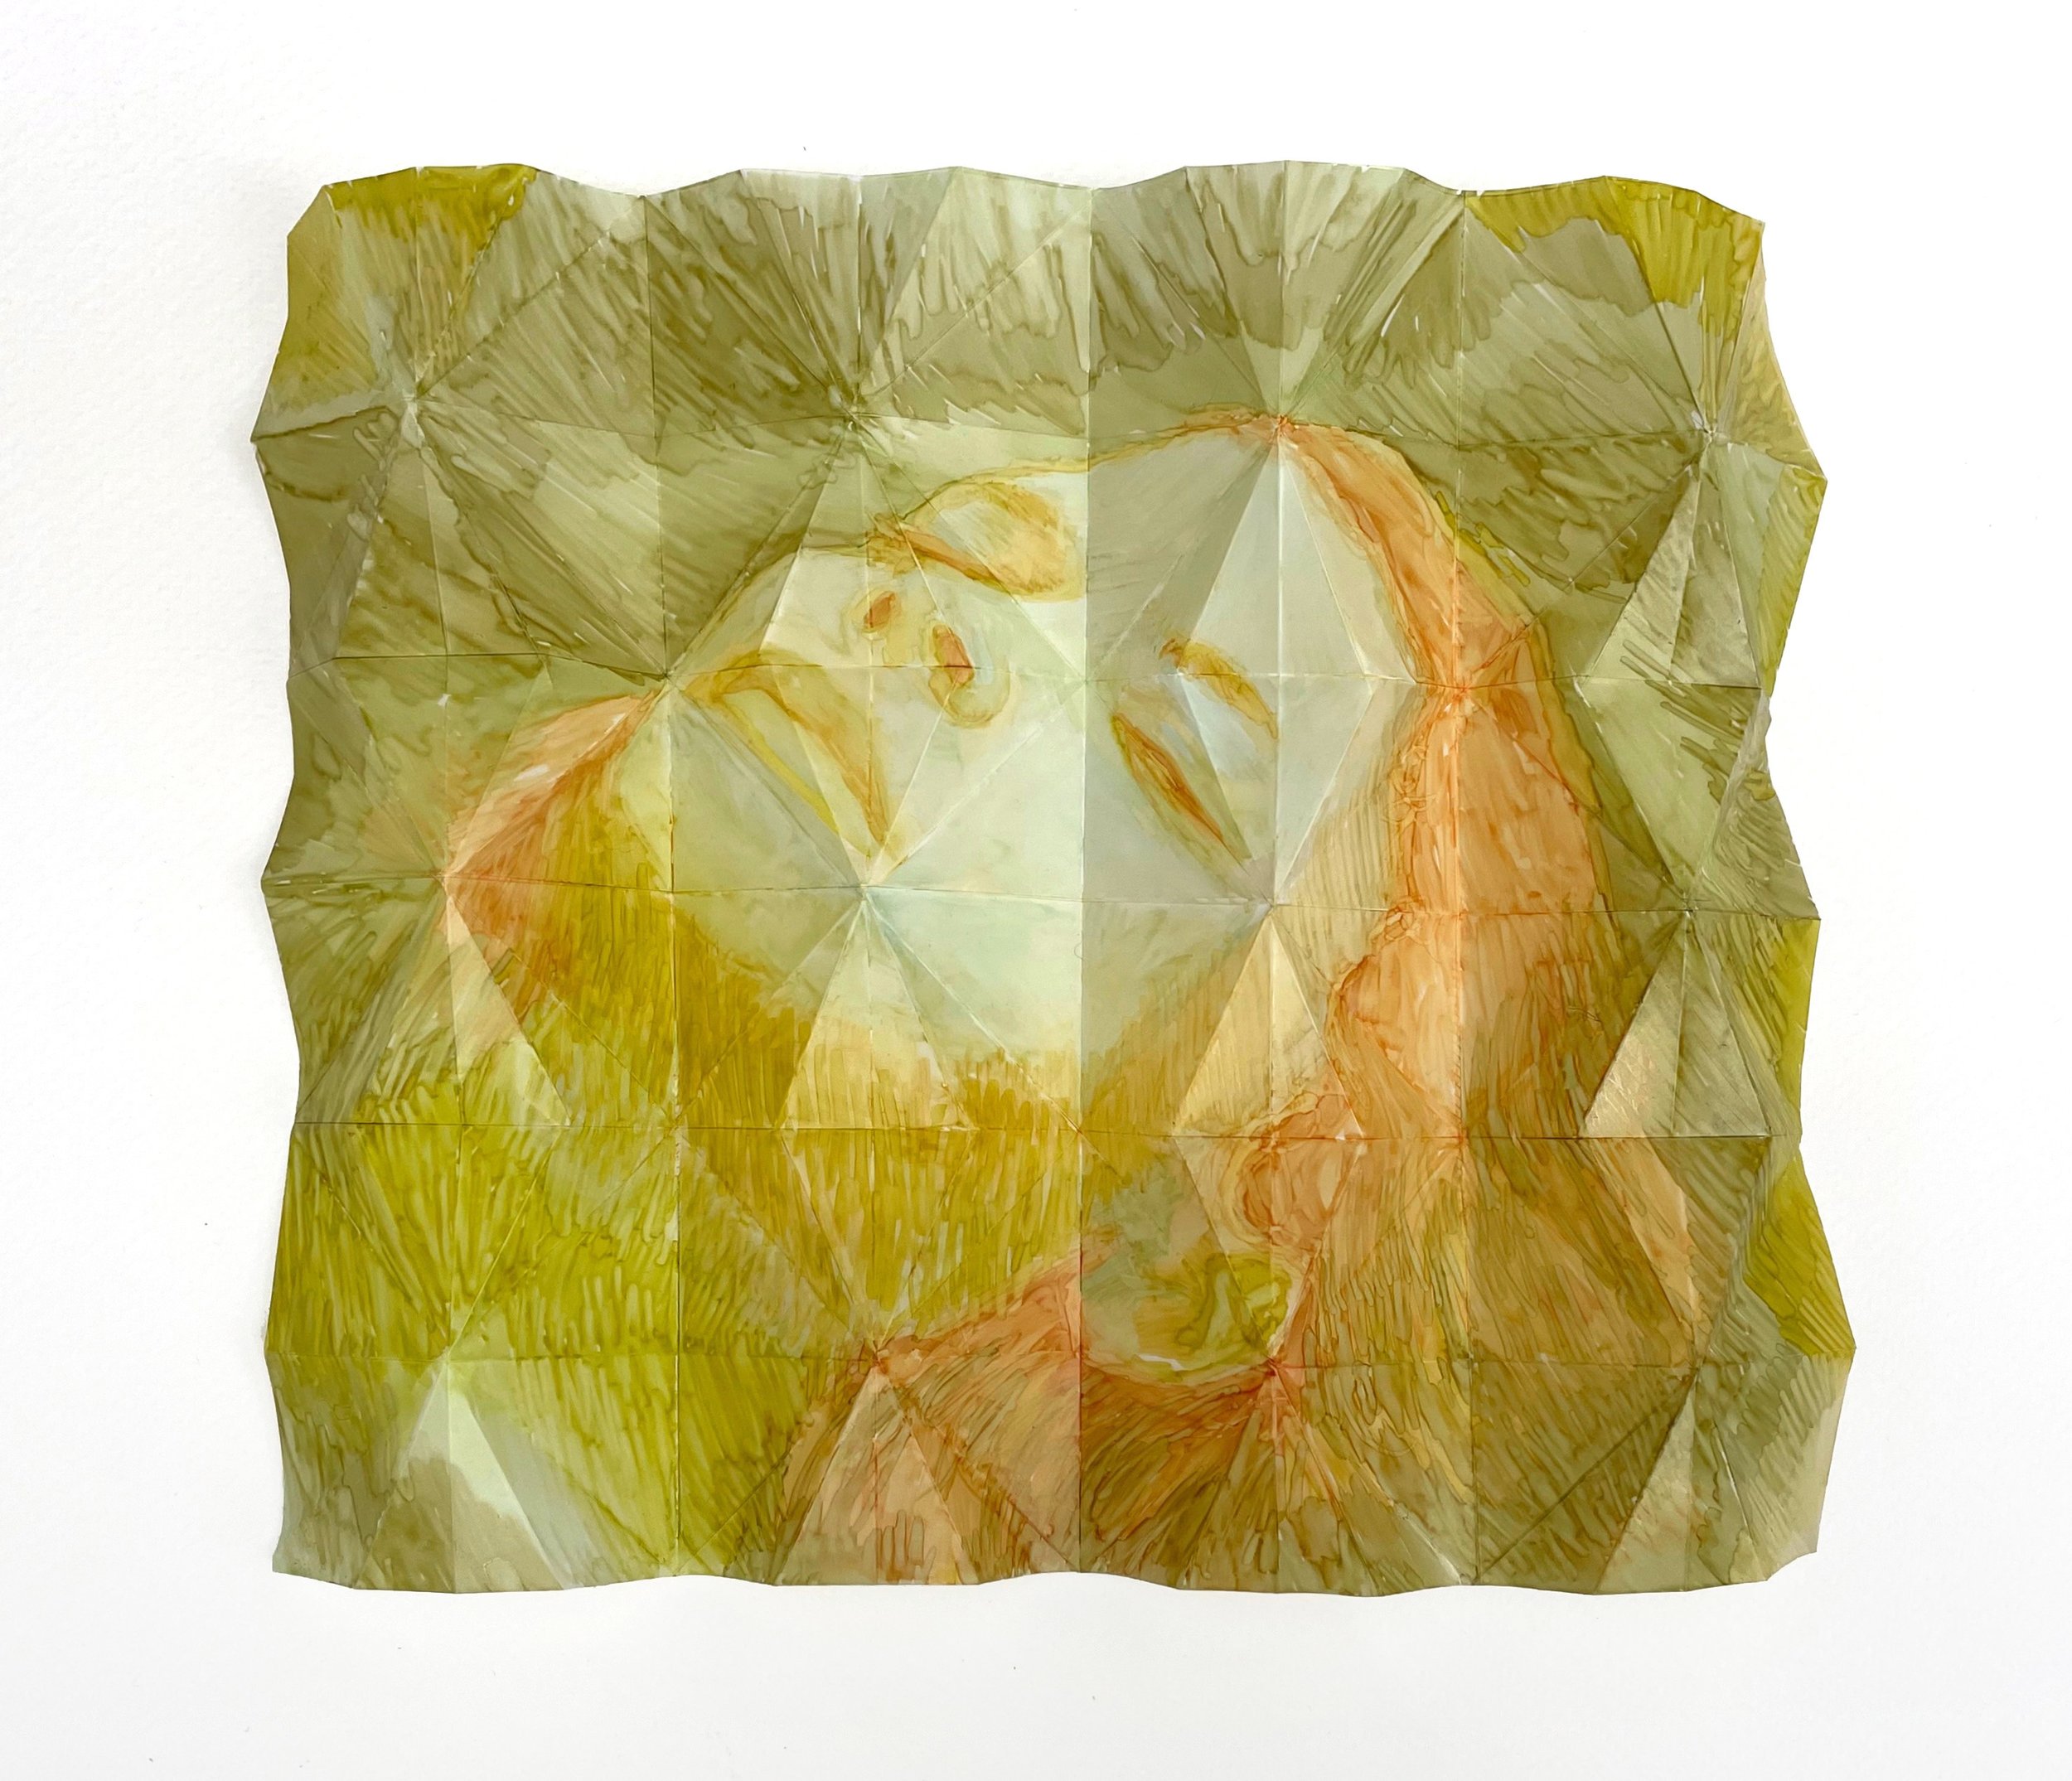 Hills, promarker on yupo translucent paper, 24 x 26 cm, 2022